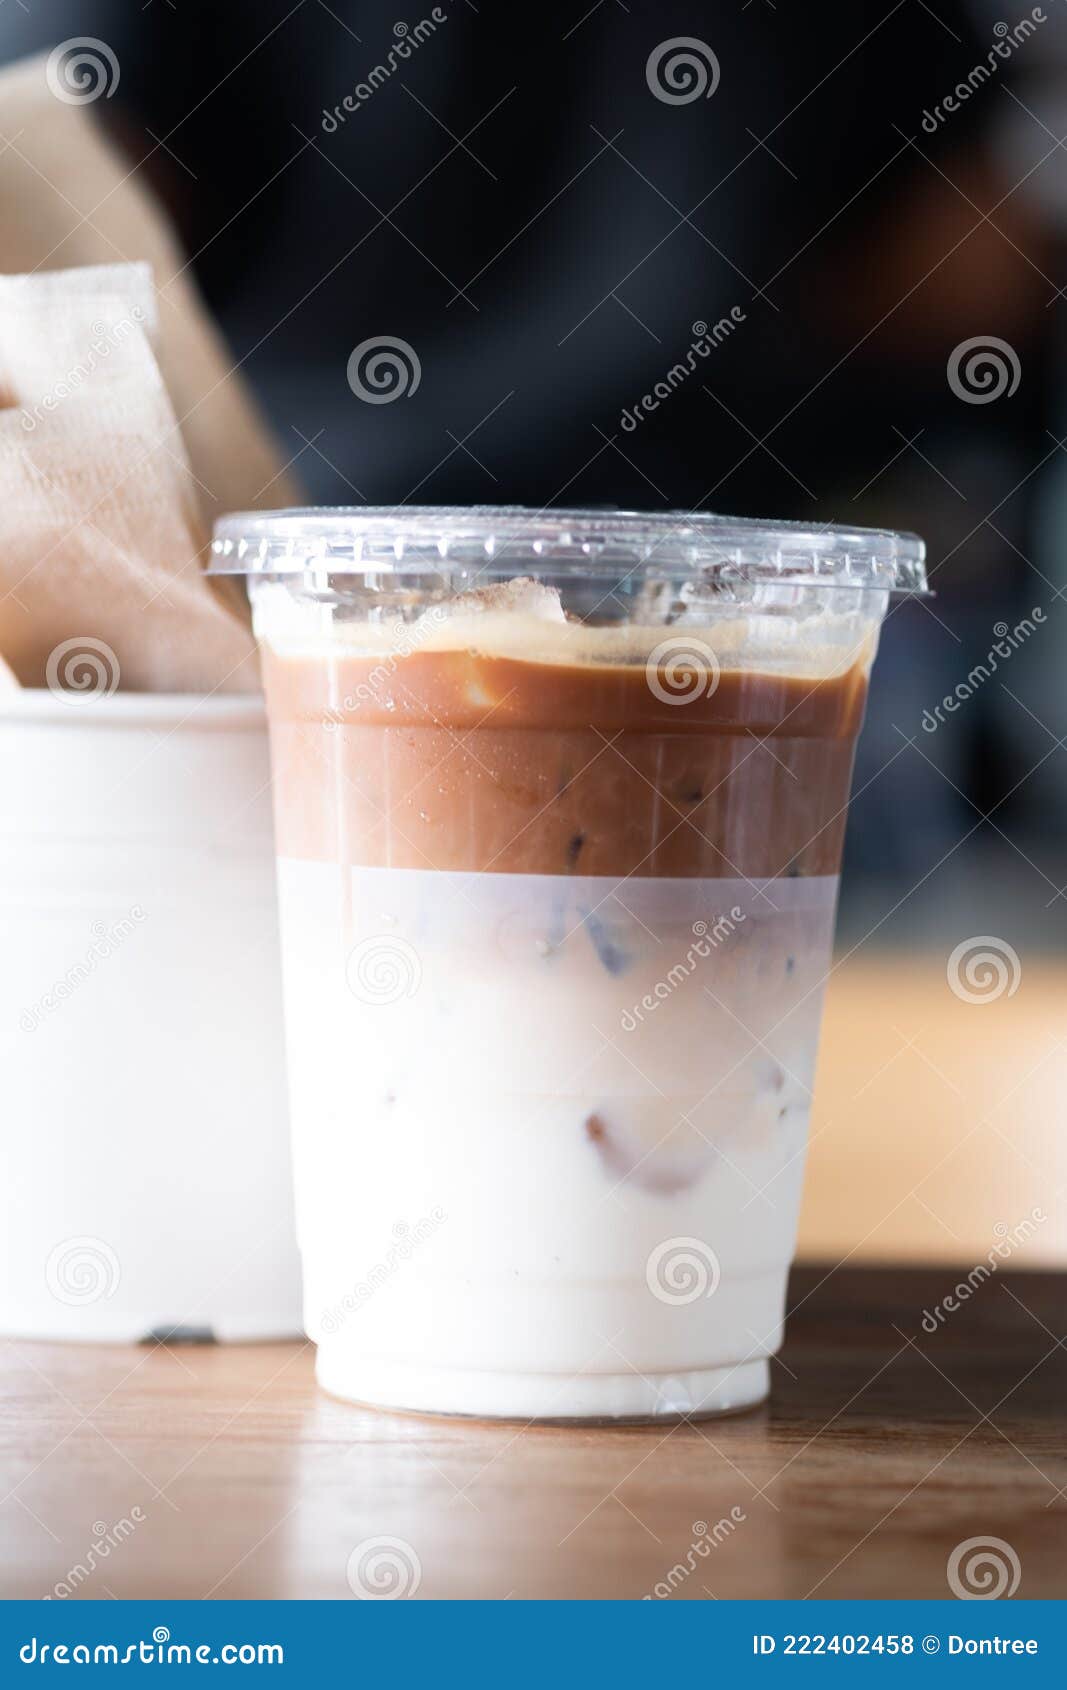 https://thumbs.dreamstime.com/z/iced-latte-coffee-bottom-as-milk-plastic-glass-oz-wood-table-222402458.jpg